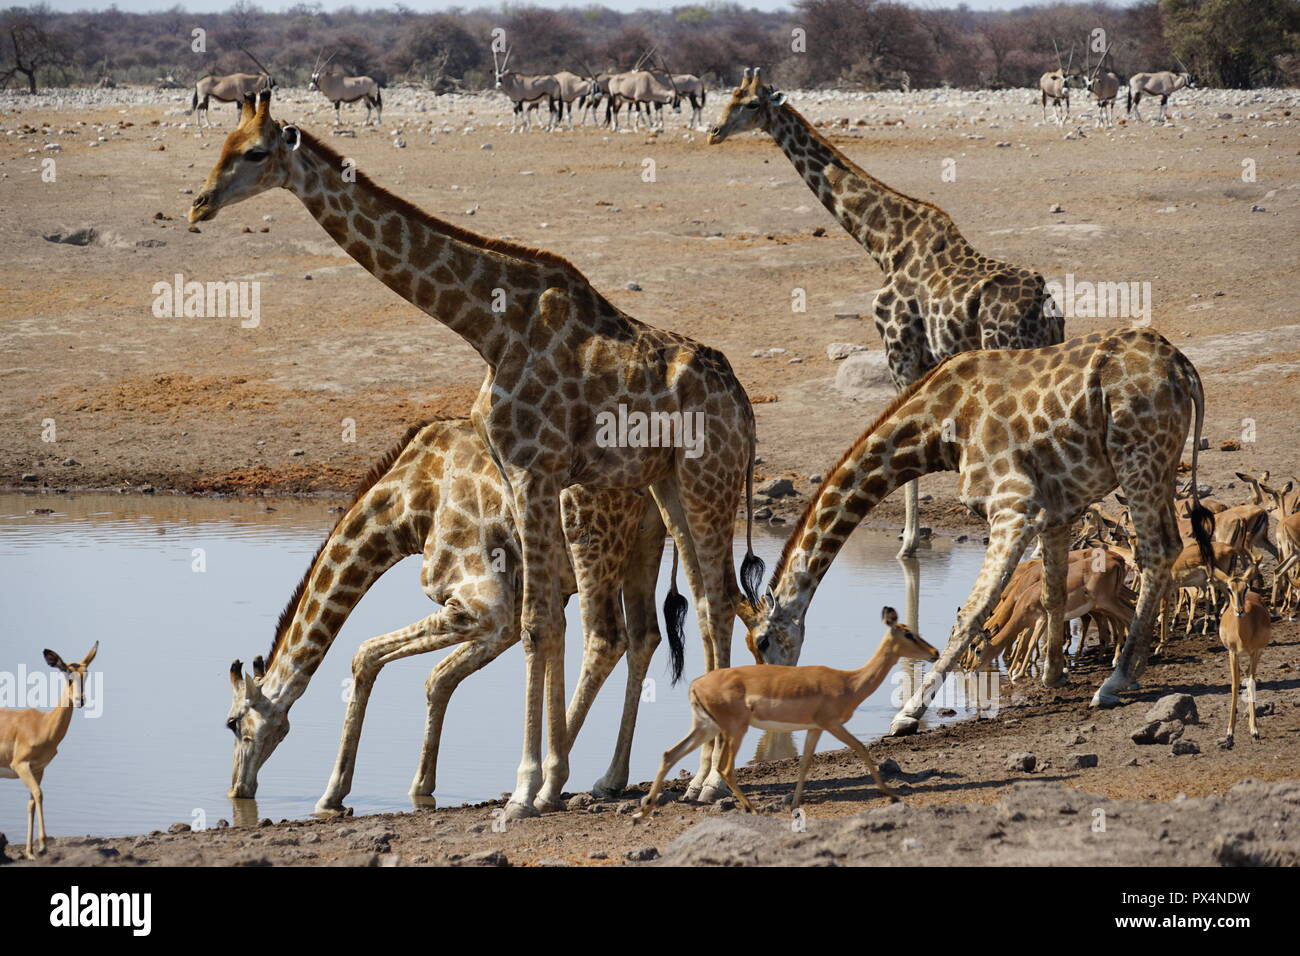 Giraffen und andere Tiere am Wasserloch 'Chudob', Etosha Nationalpark, Namibia Namibia, Afrika Stock Photo